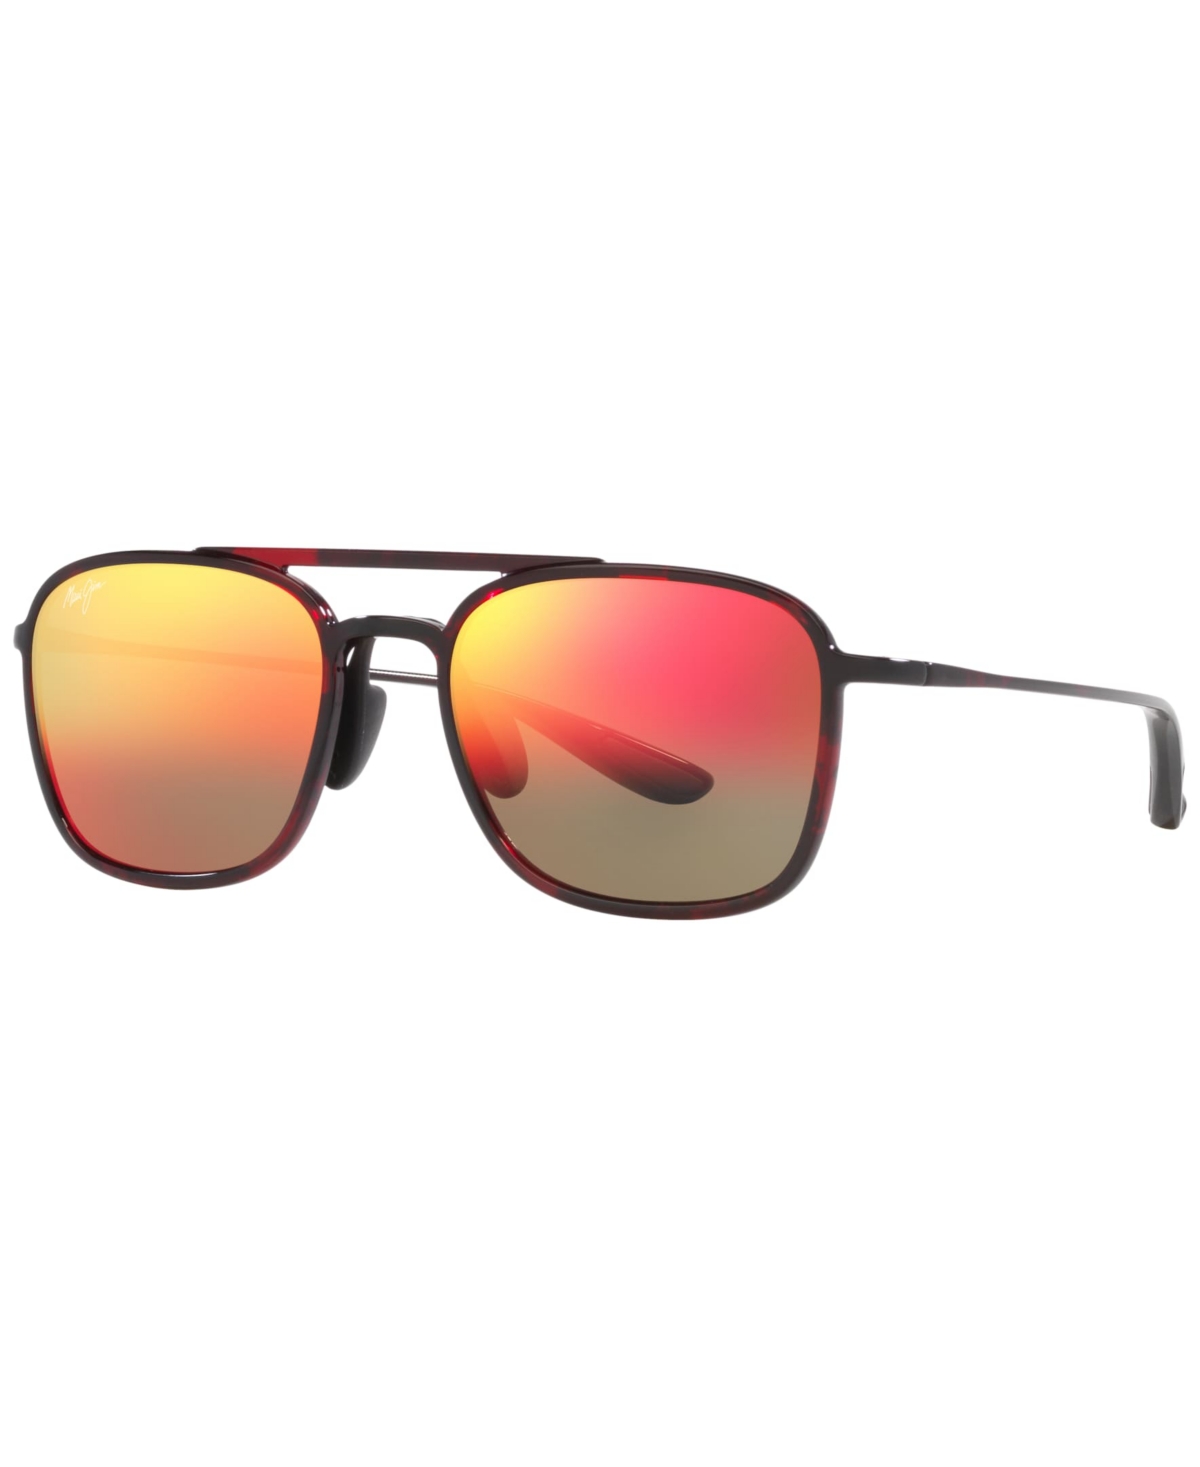 Unisex Keokea 55 Sunglasses, MJ00068355-z - Tortoise Red